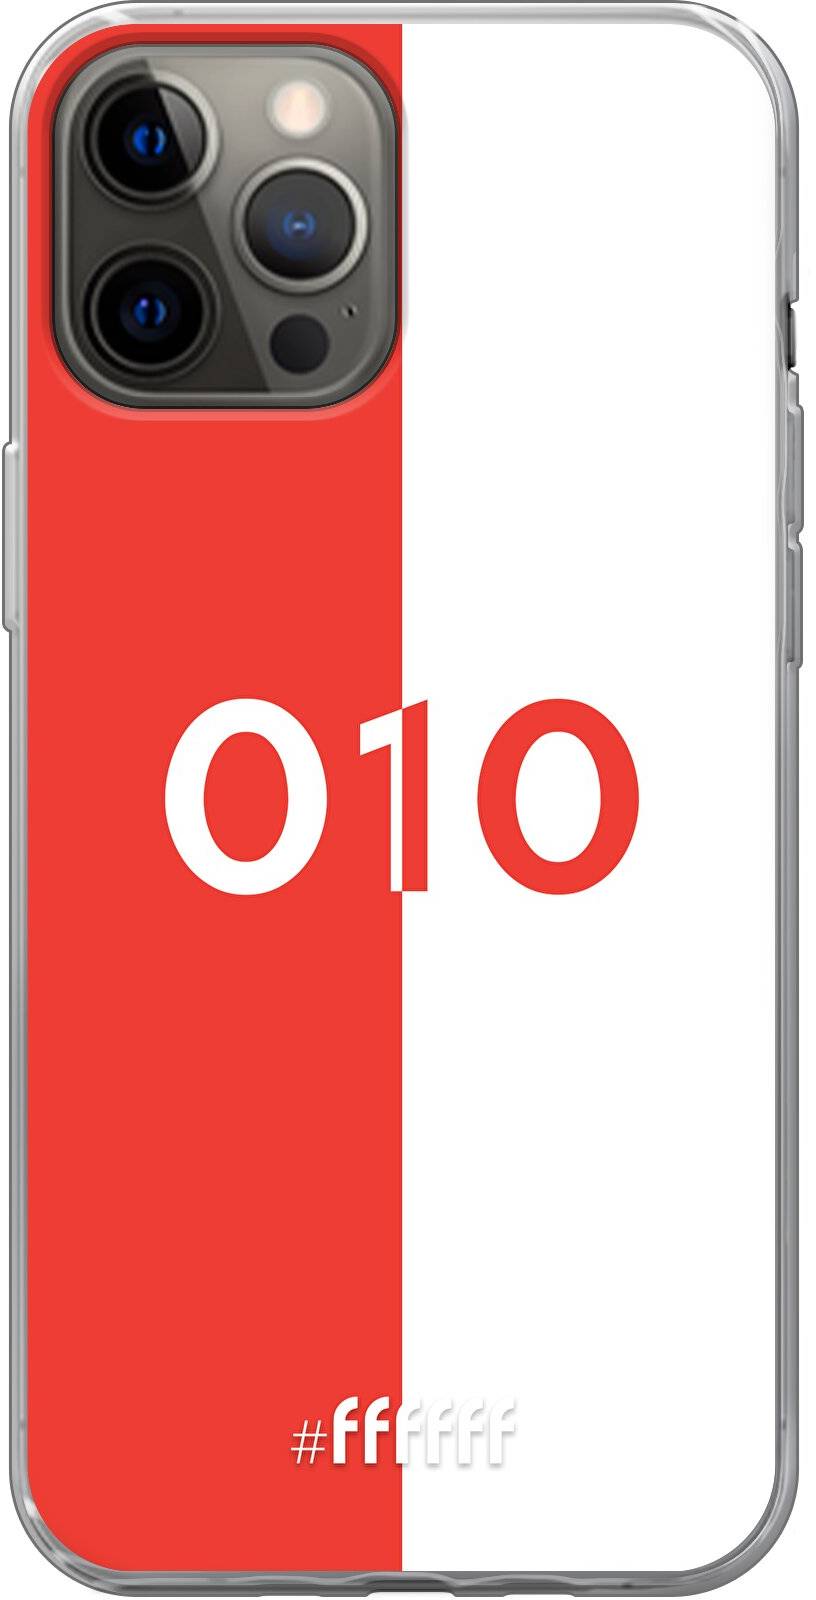 Feyenoord - 010 iPhone 12 Pro Max